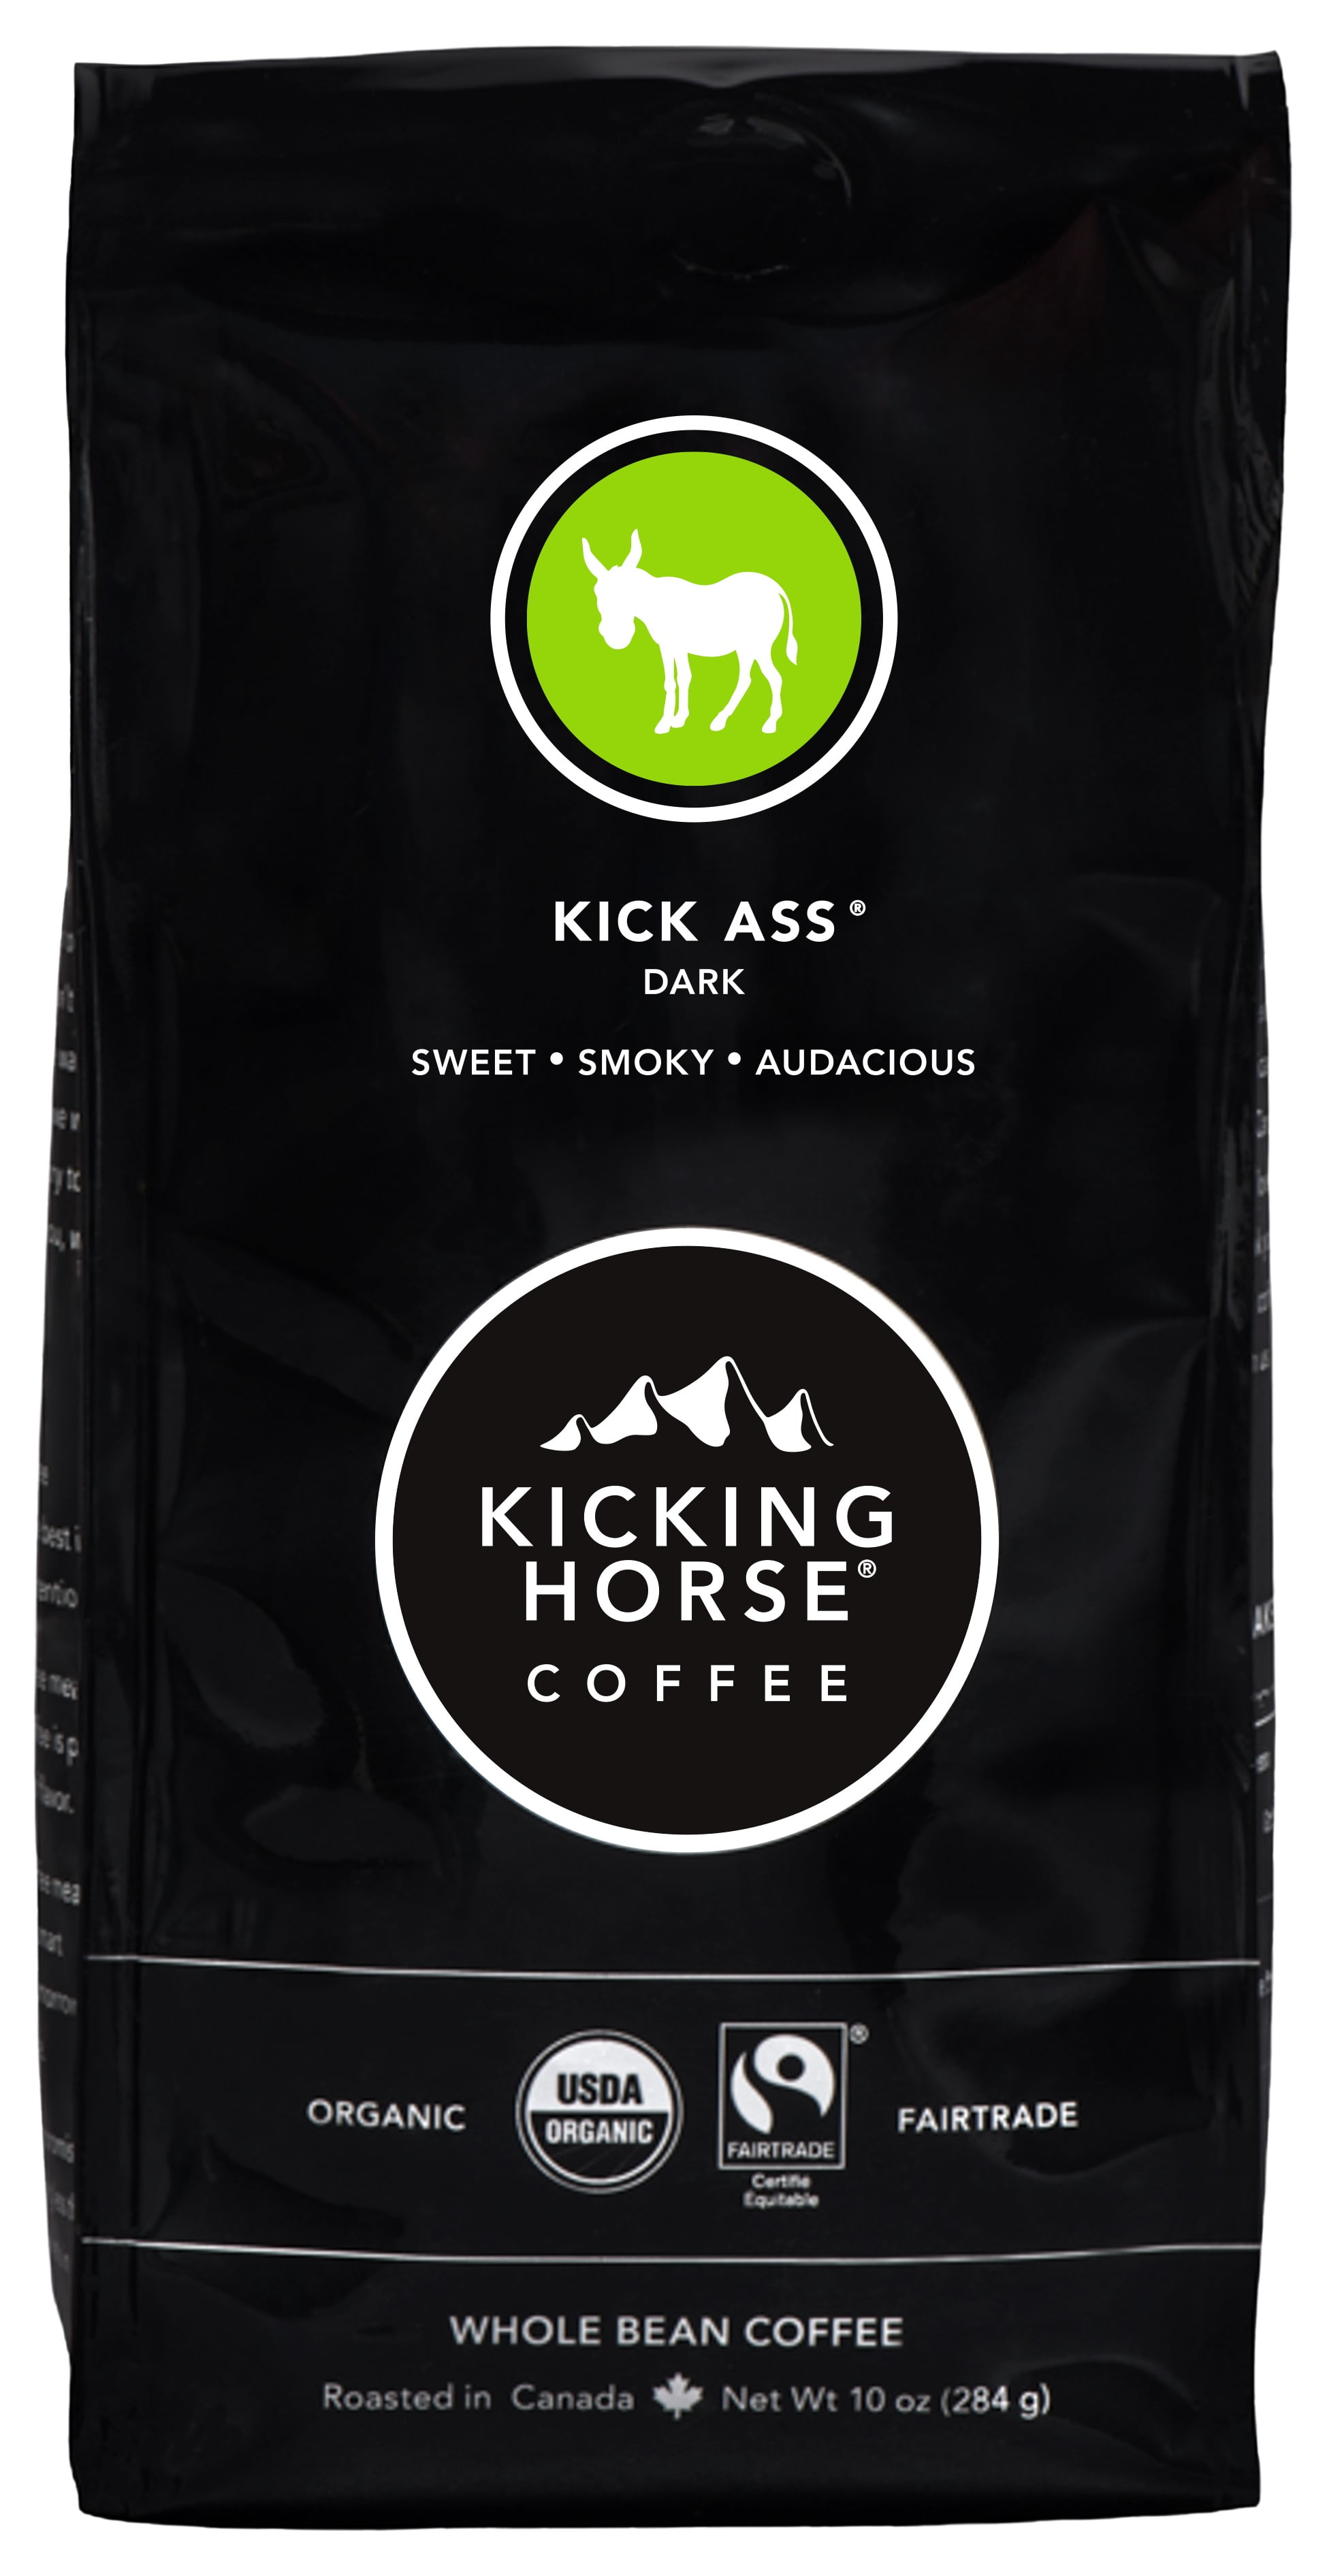 Kicking Horse Coffee, Kick Ass, Dark Roast, Whole Bean Coffee, 10 oz